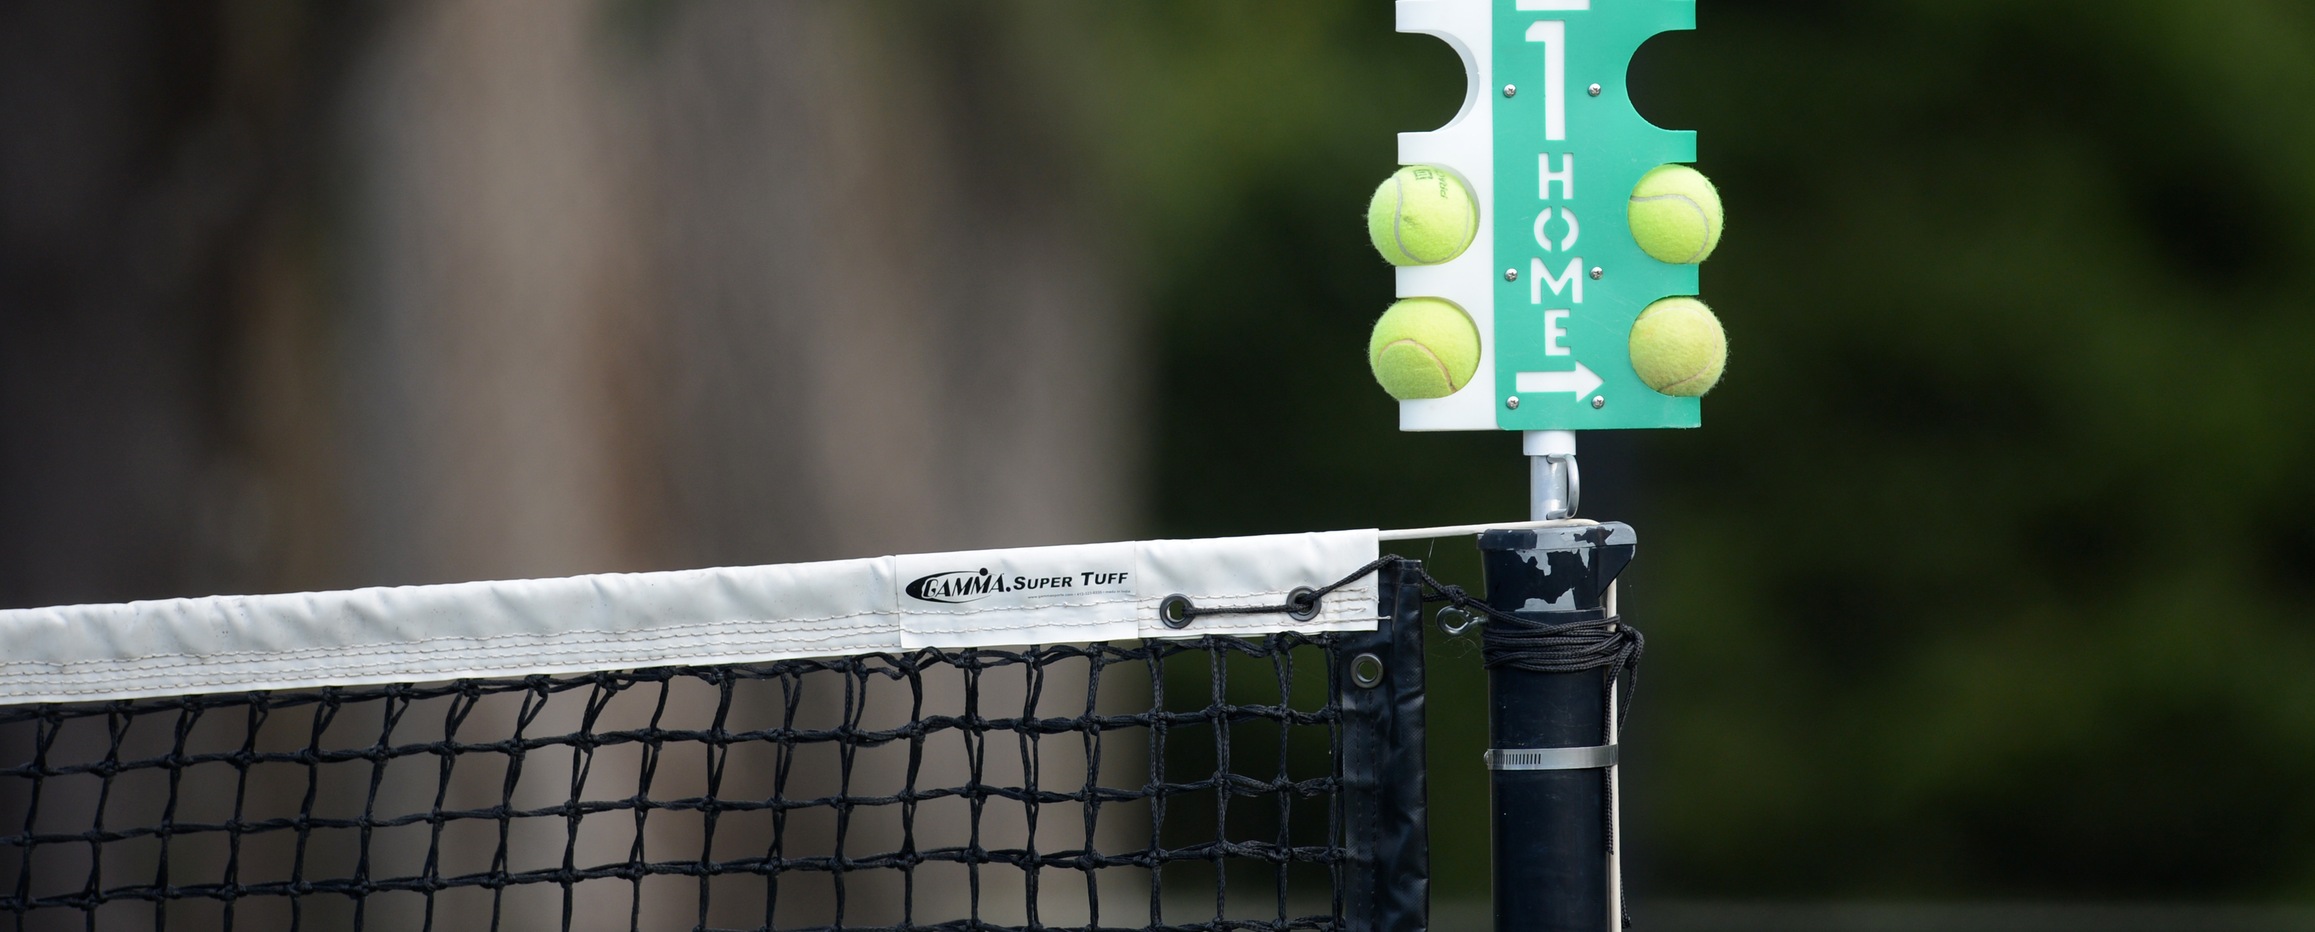 Cornell tops Storm in tennis action